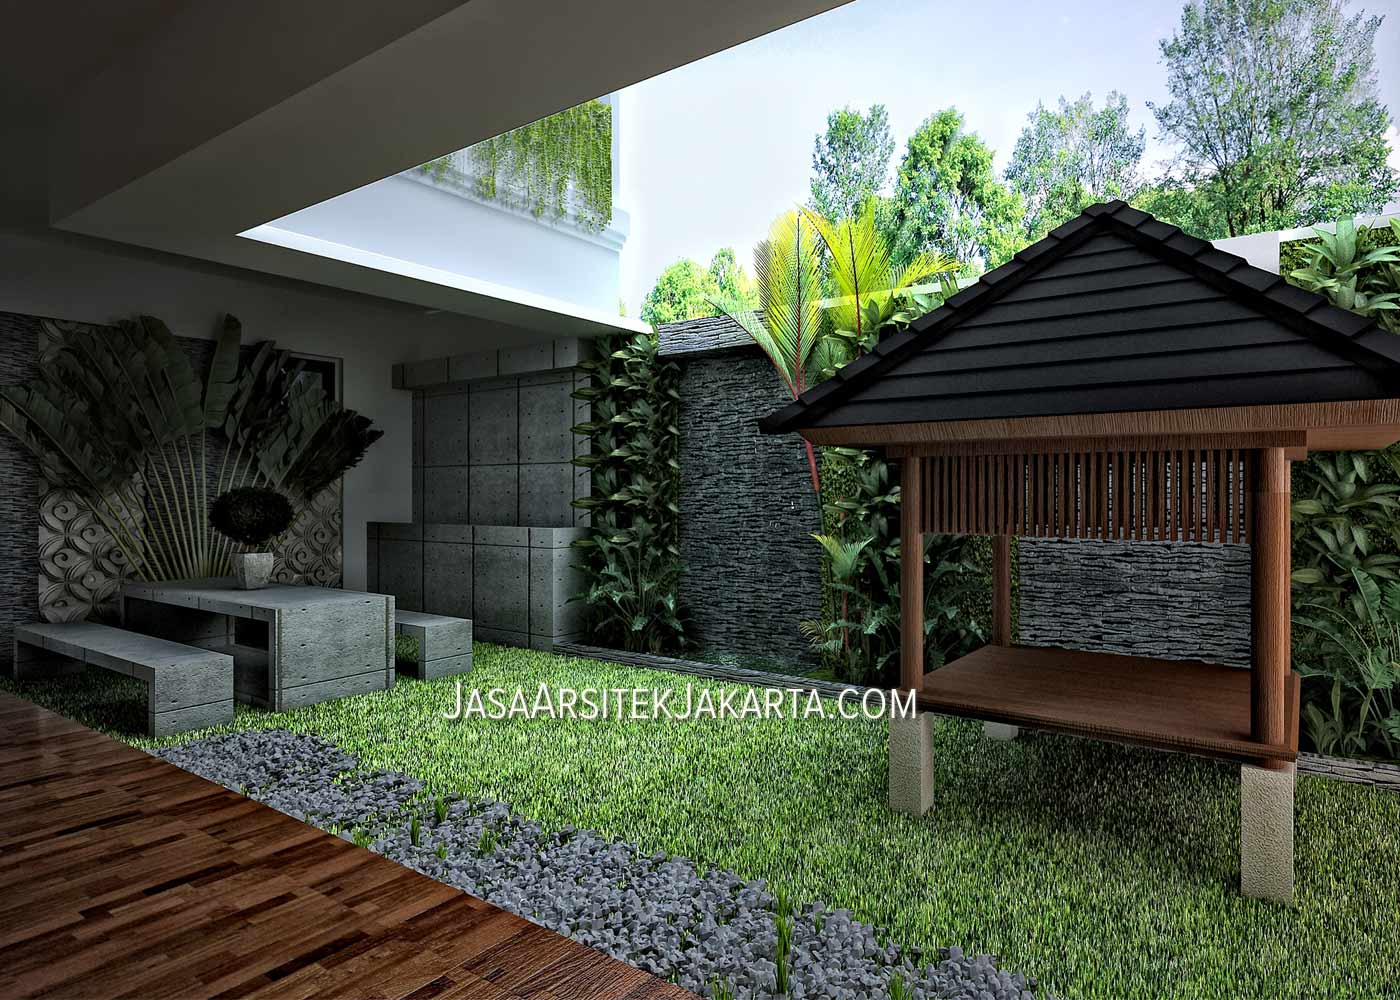 90+ Desain Rumah Villa Mungil - Inspirasi Rumah Ciamik 